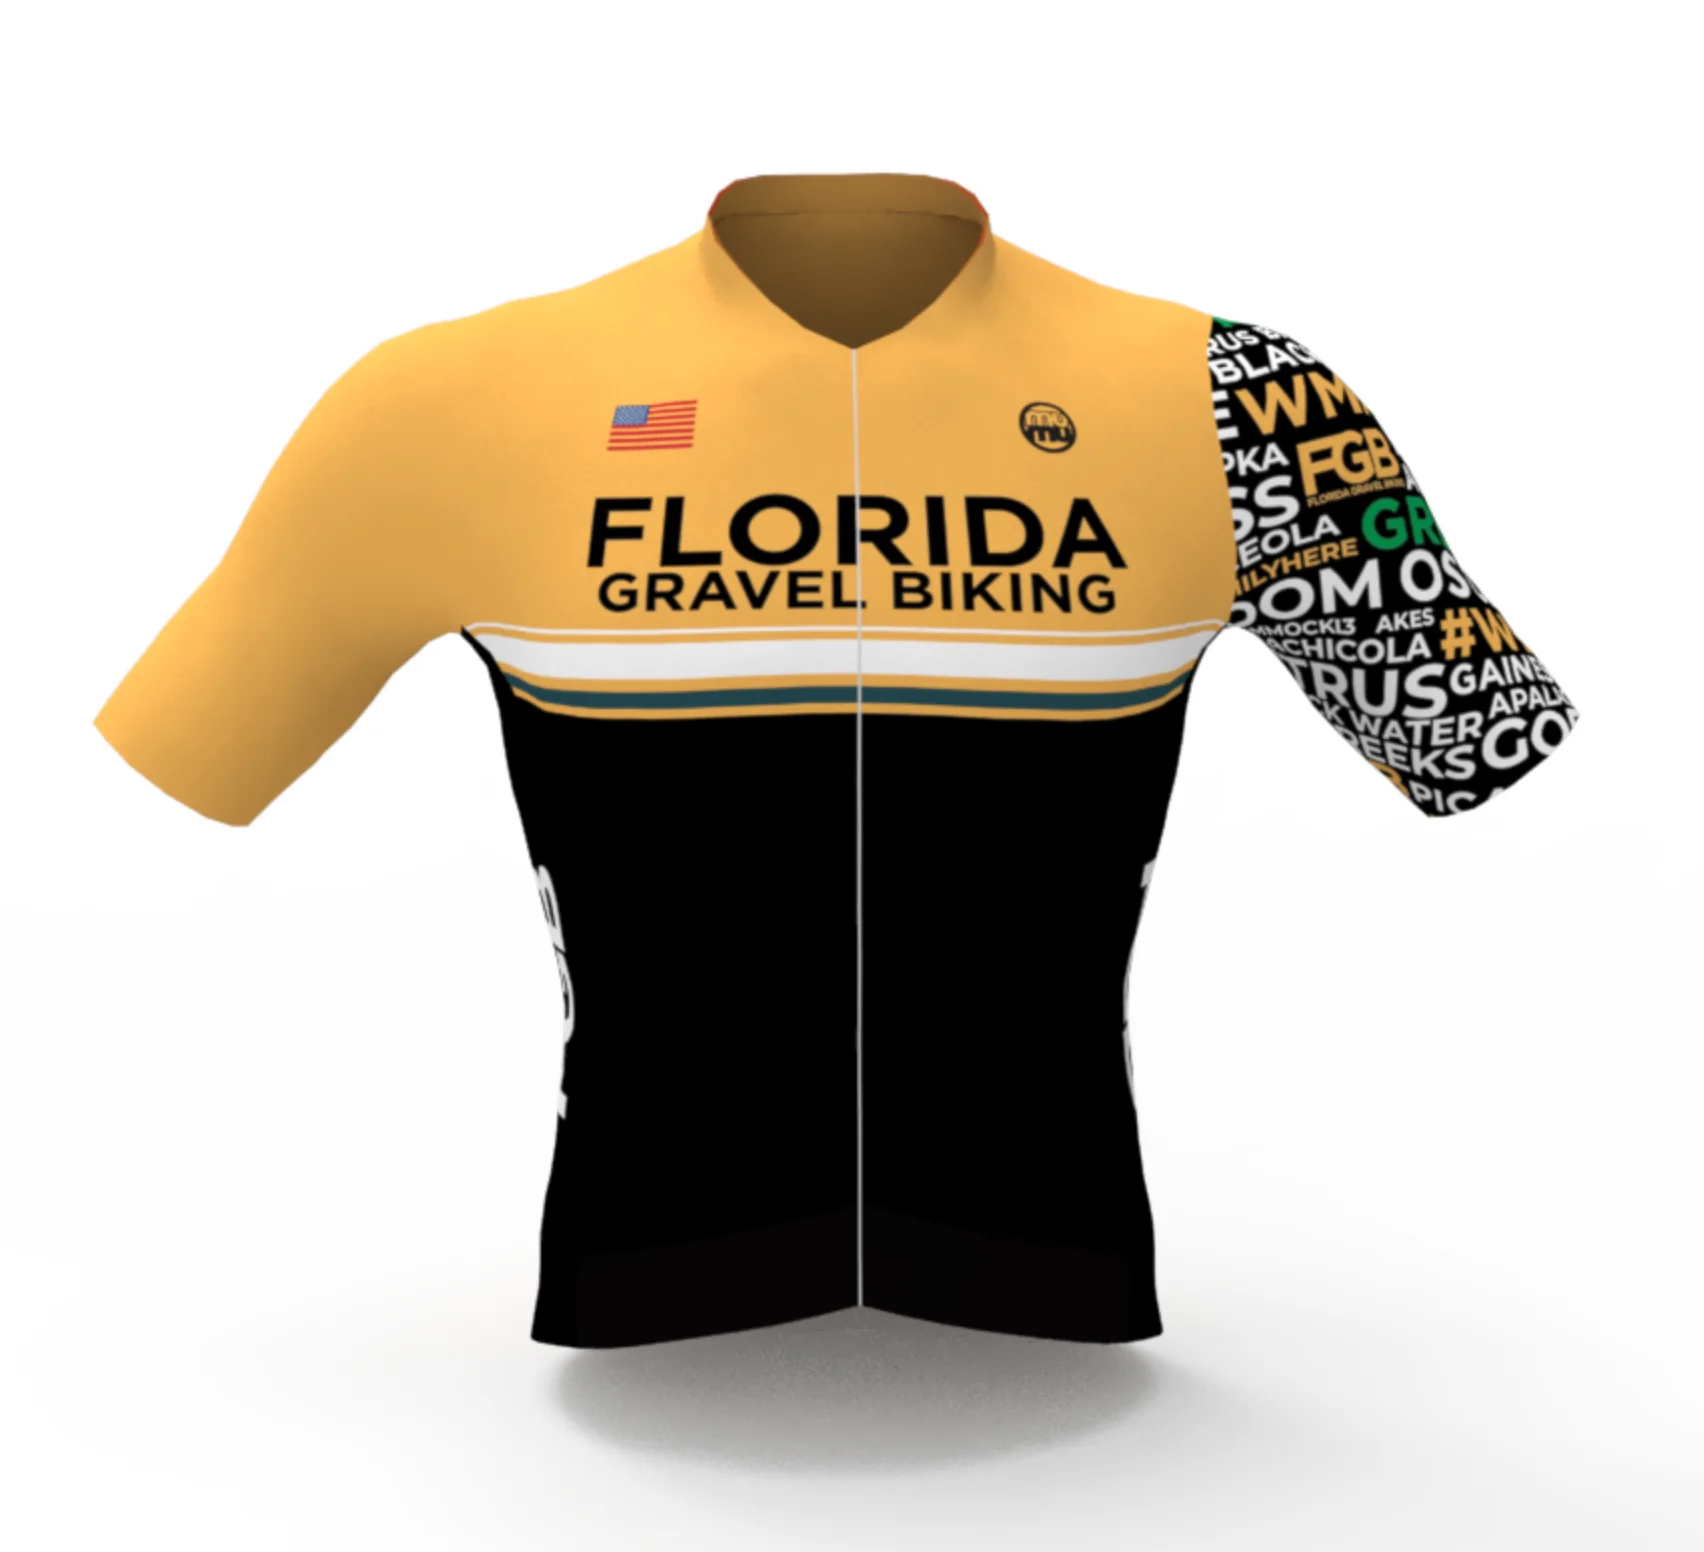 The KIT - Florida Gravel Biking